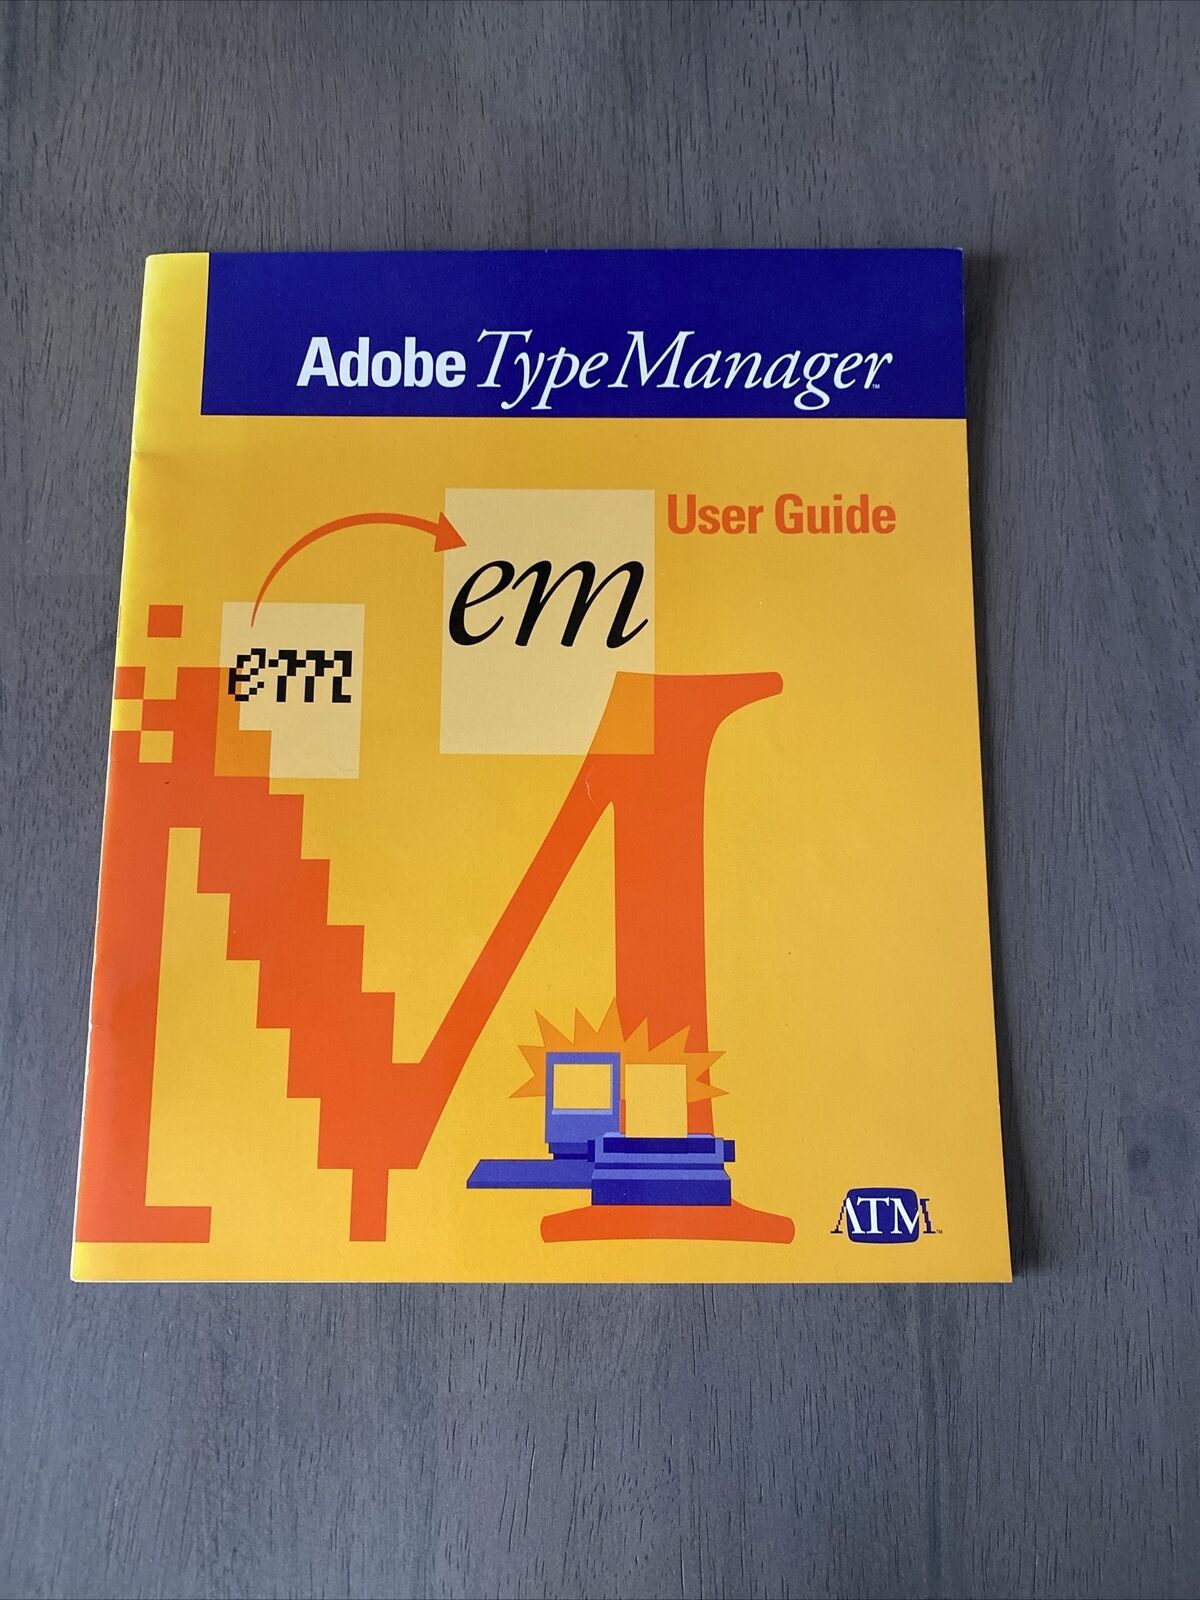 Junk Drawer Vintage 1989 Macintosh Adobe Type Manager User Guide